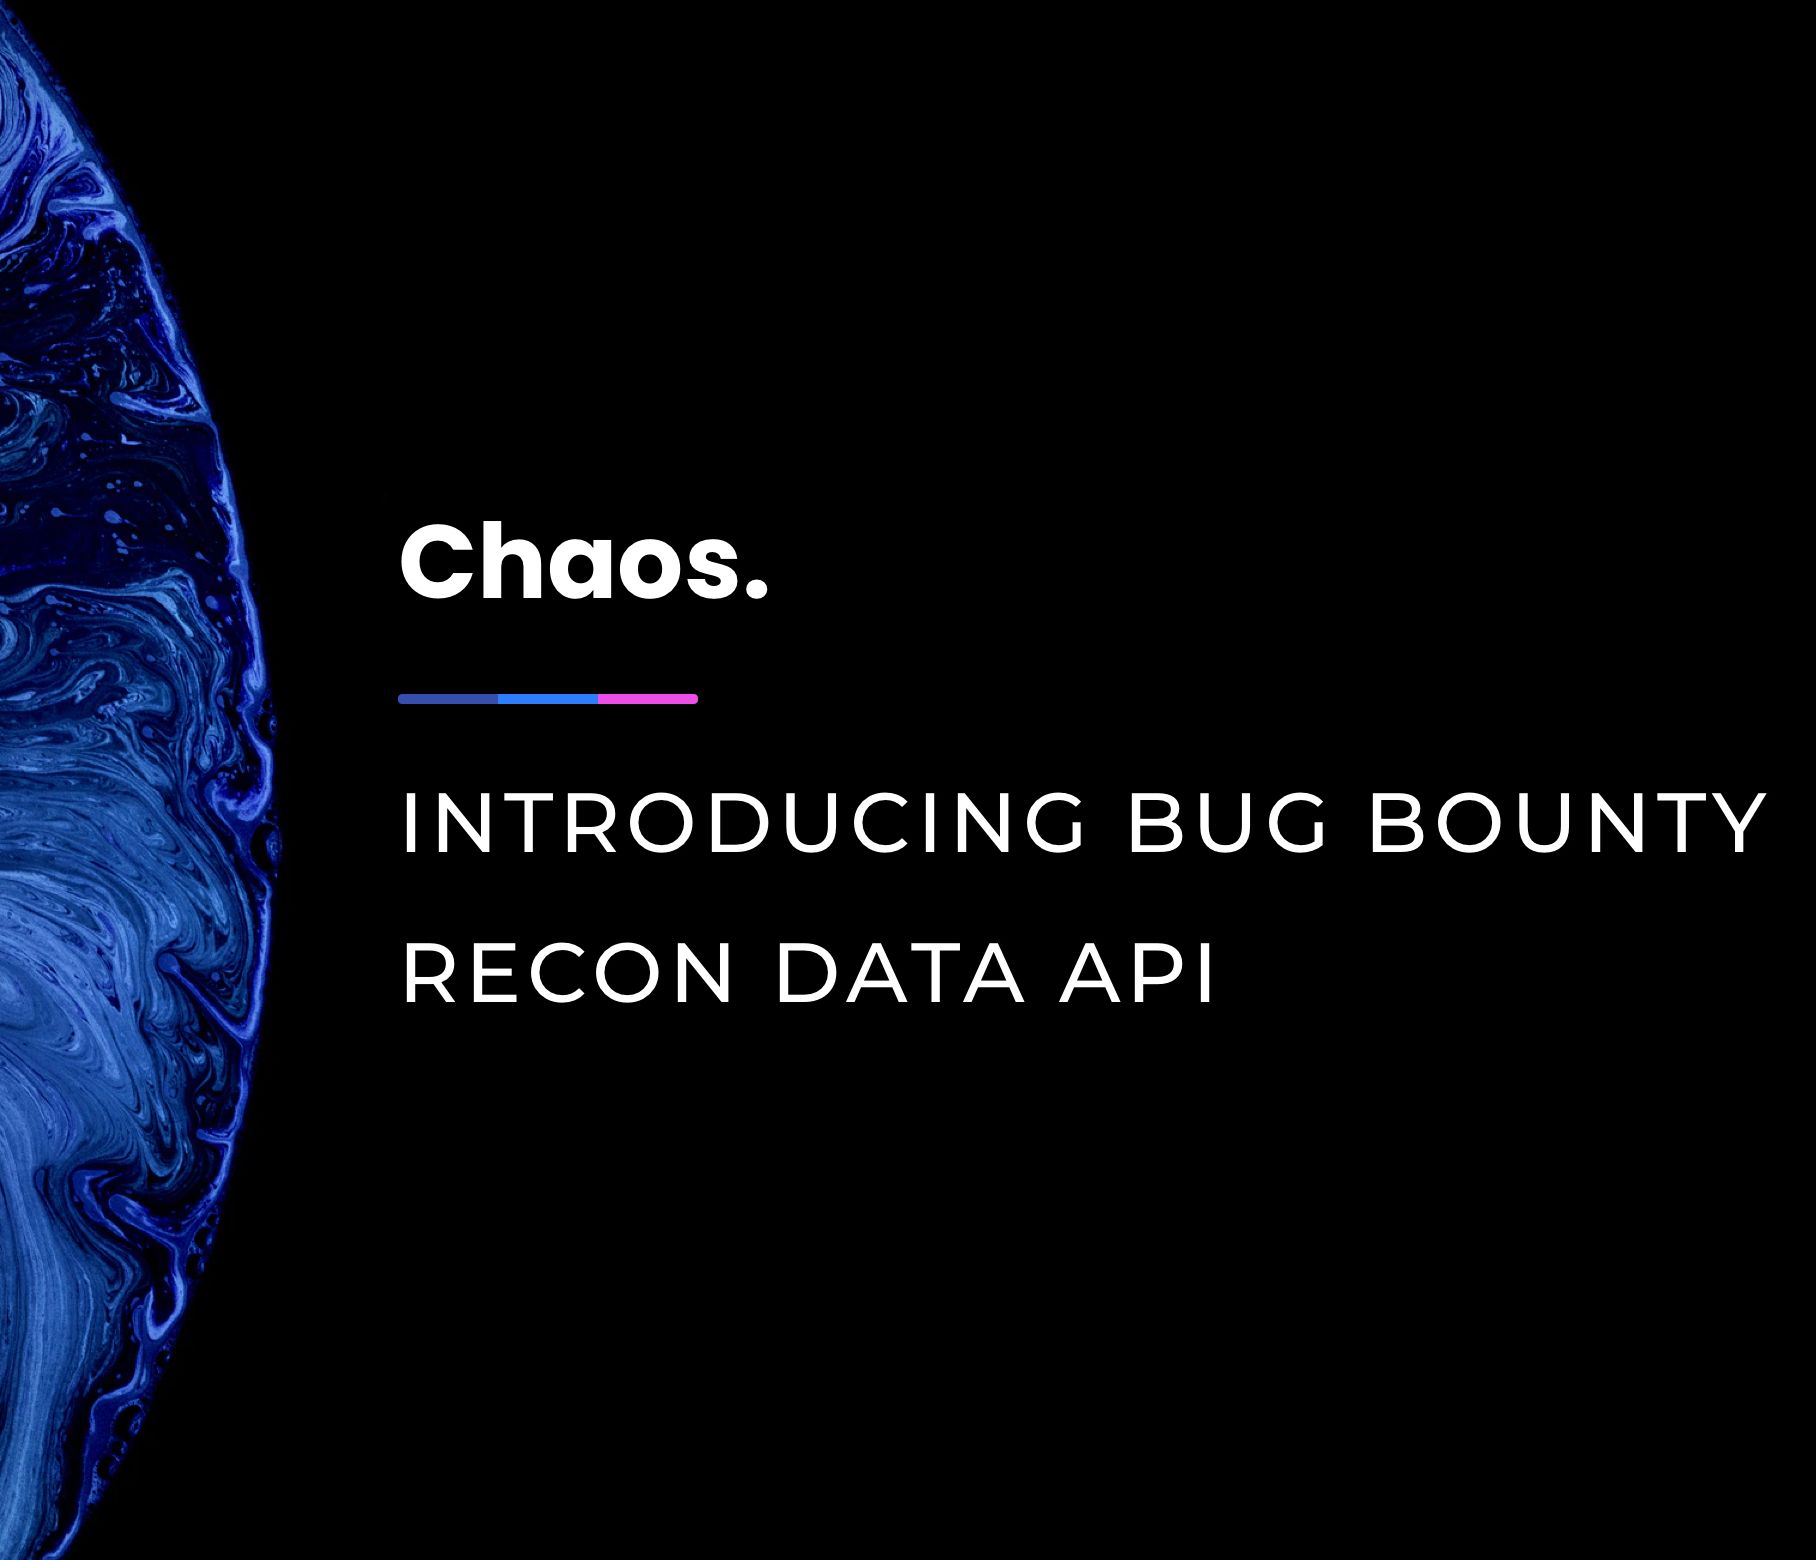 Introducing Chaos Bug bounty recon data API